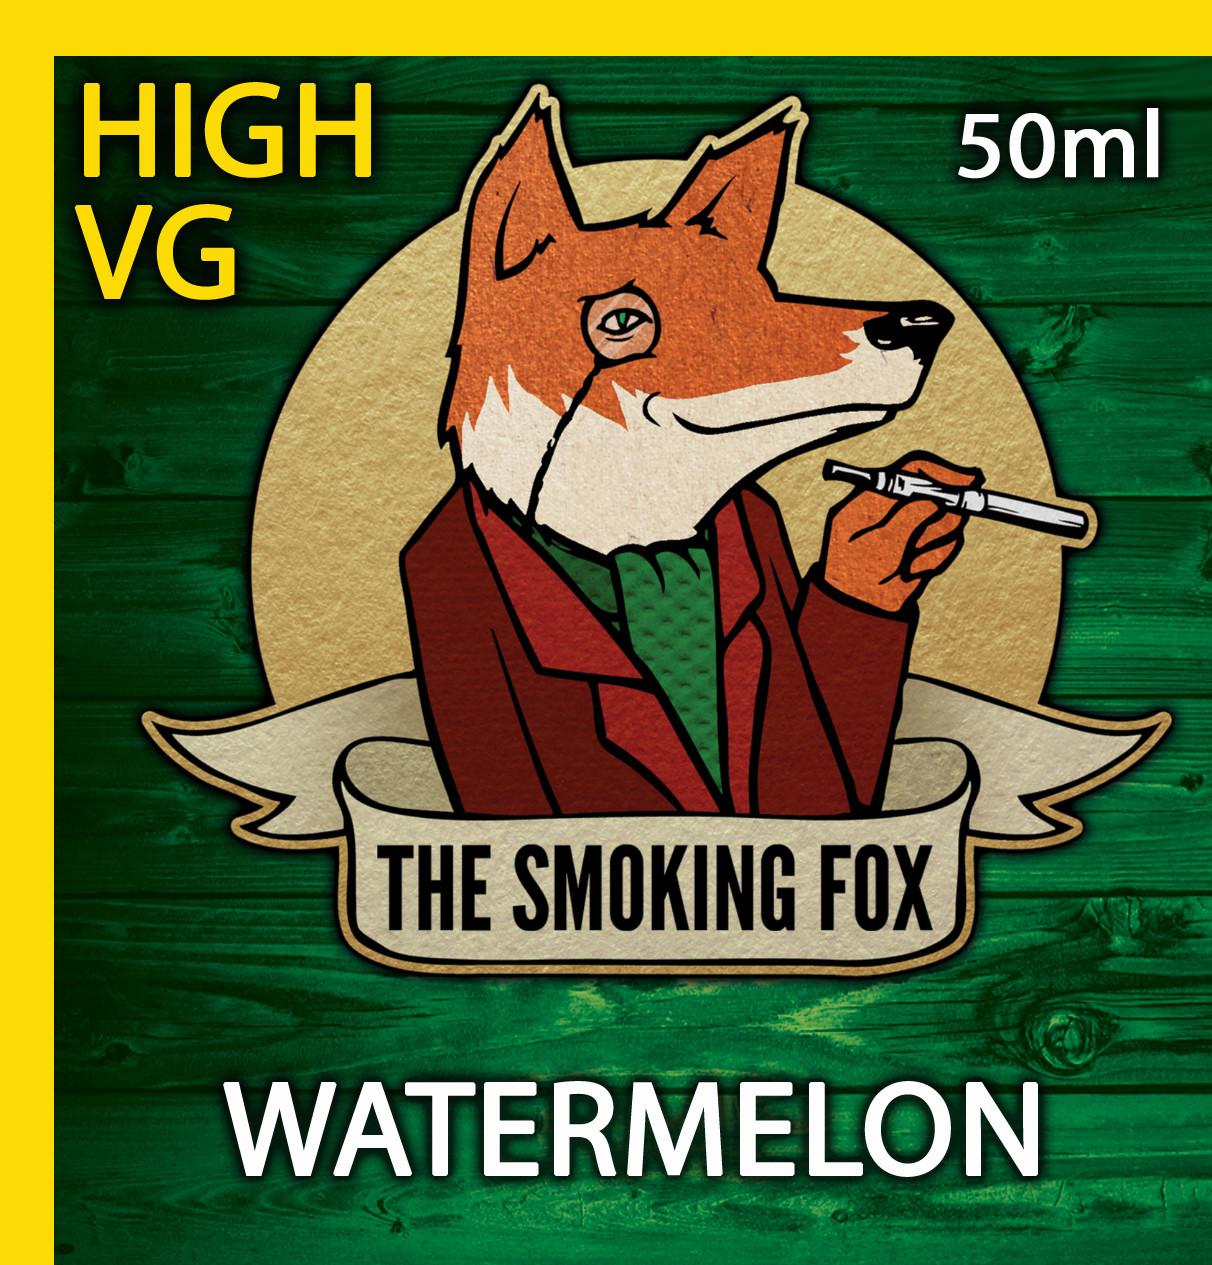 THE SMOKING FOX 50ml HIGH VG - WATERMELON